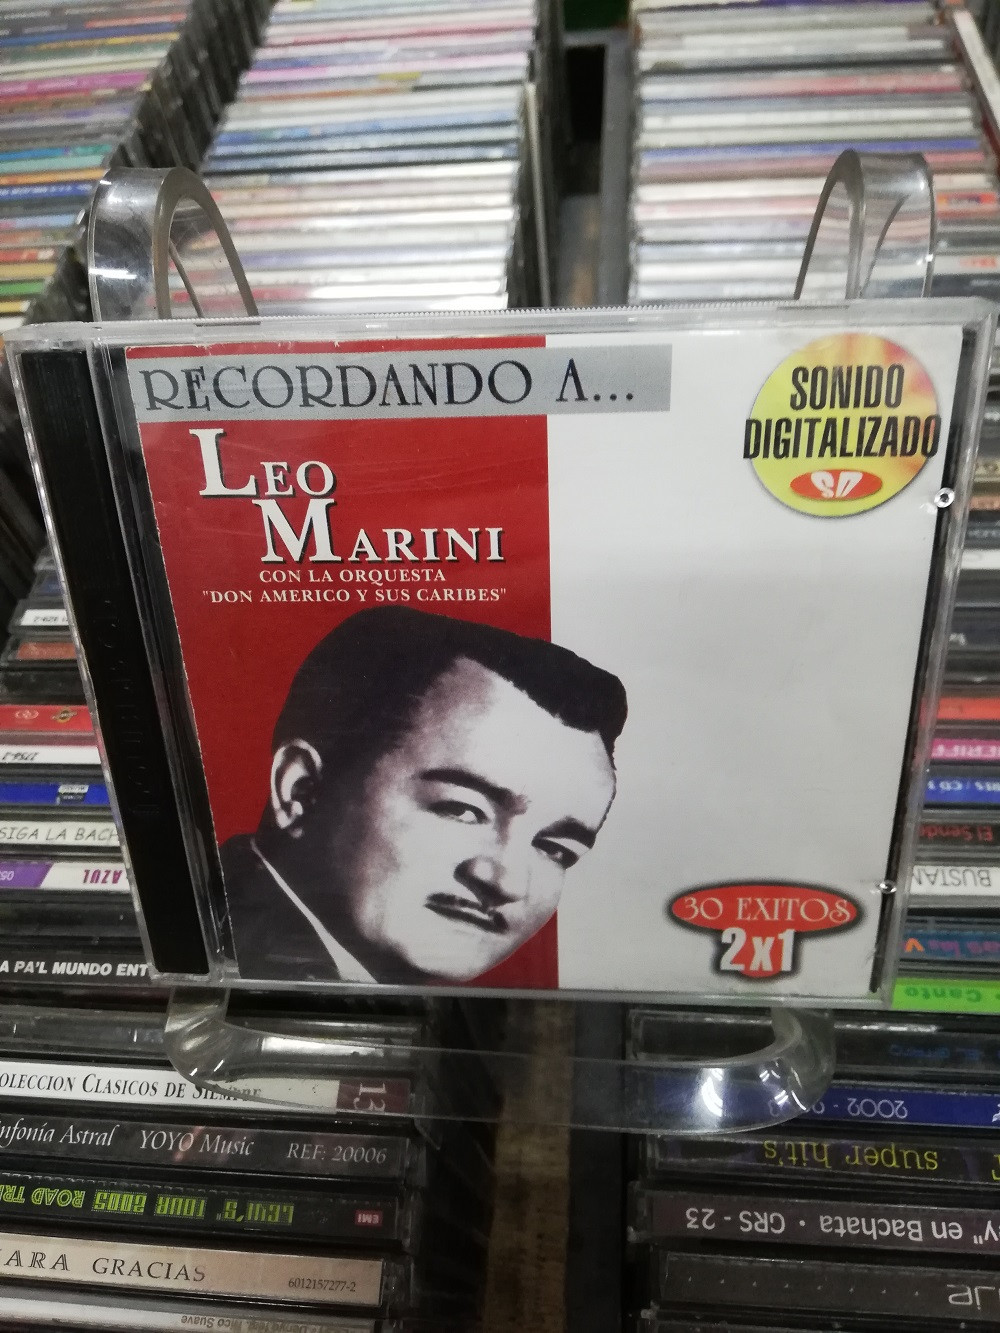 Imagen CD DOBLE LEO MARINI CON LA ORQUESTA "DON AMERICO Y SUS CARIBES" - RECORDANDO 1